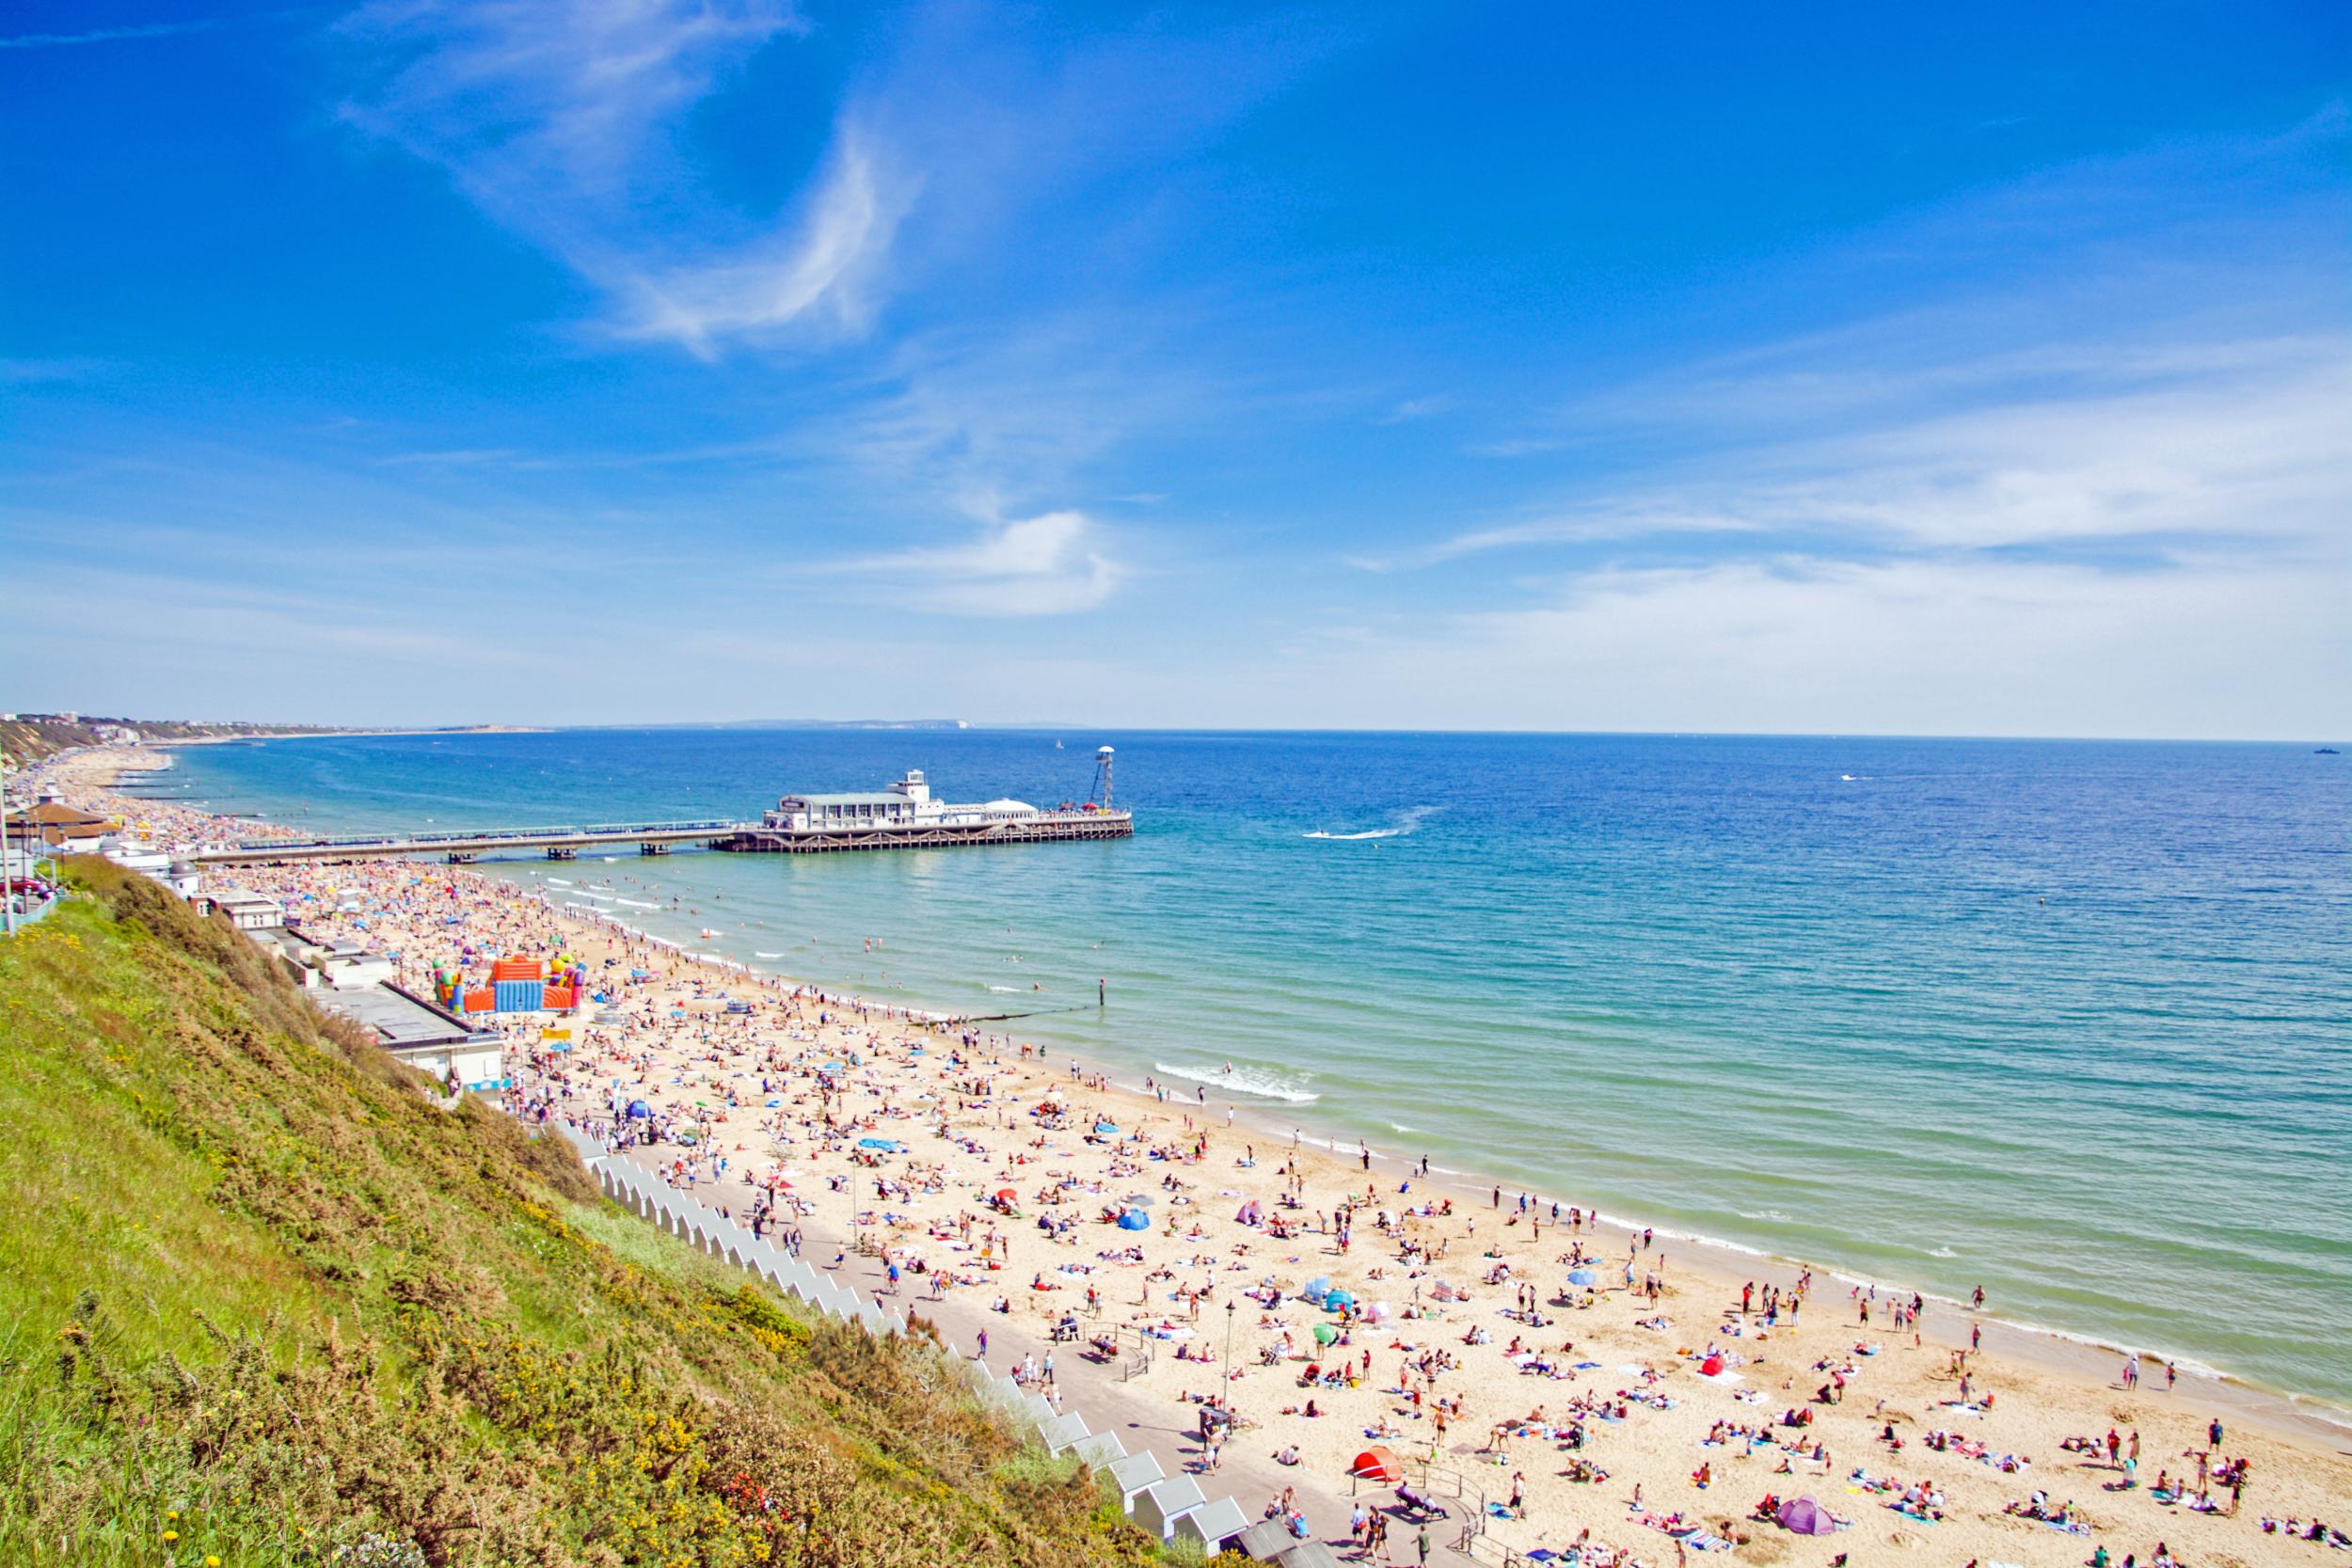 Bournemouth has 10 miles of sandy beach